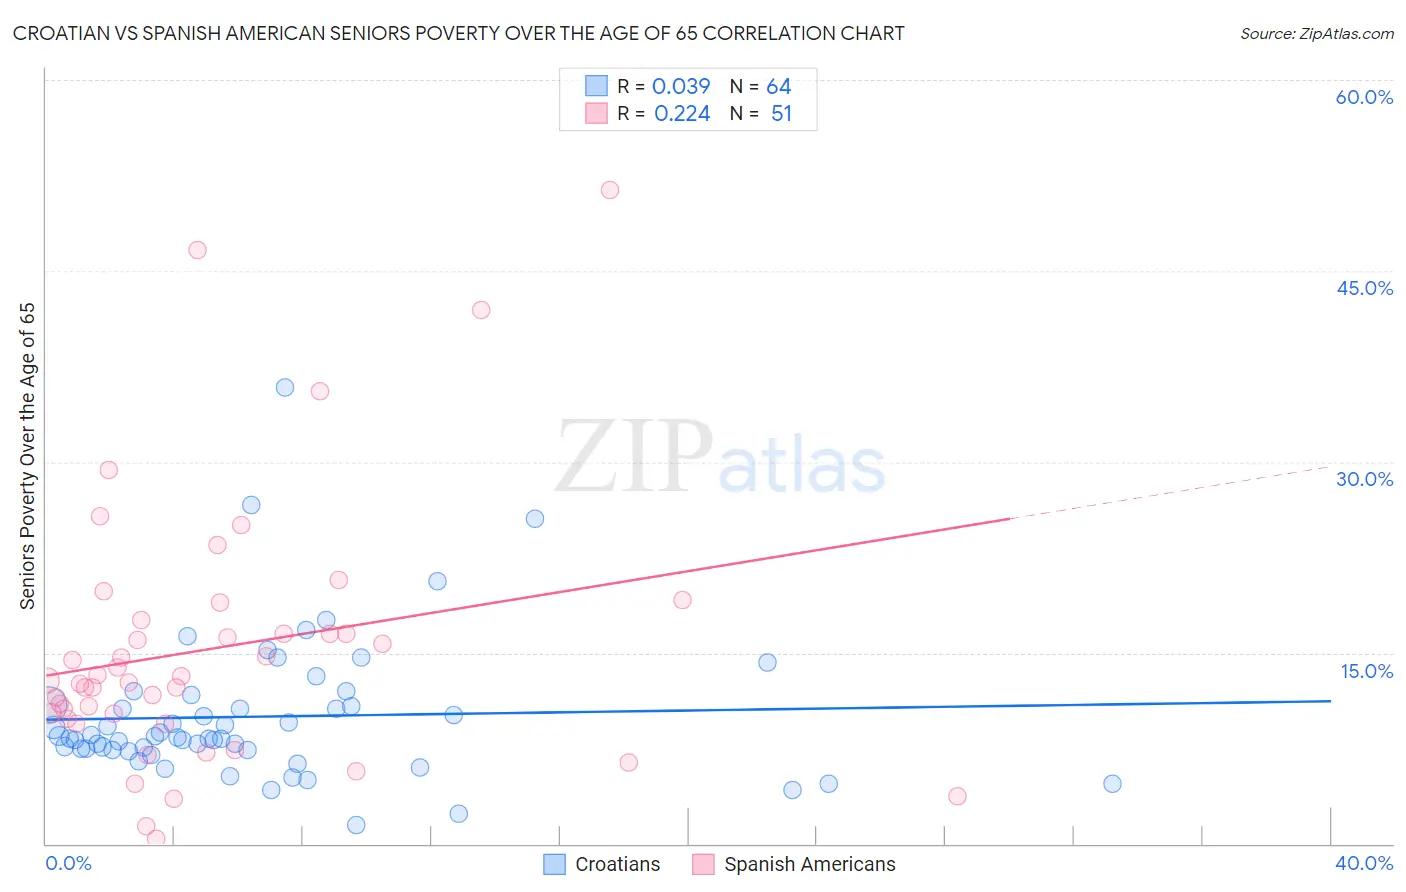 Croatian vs Spanish American Seniors Poverty Over the Age of 65